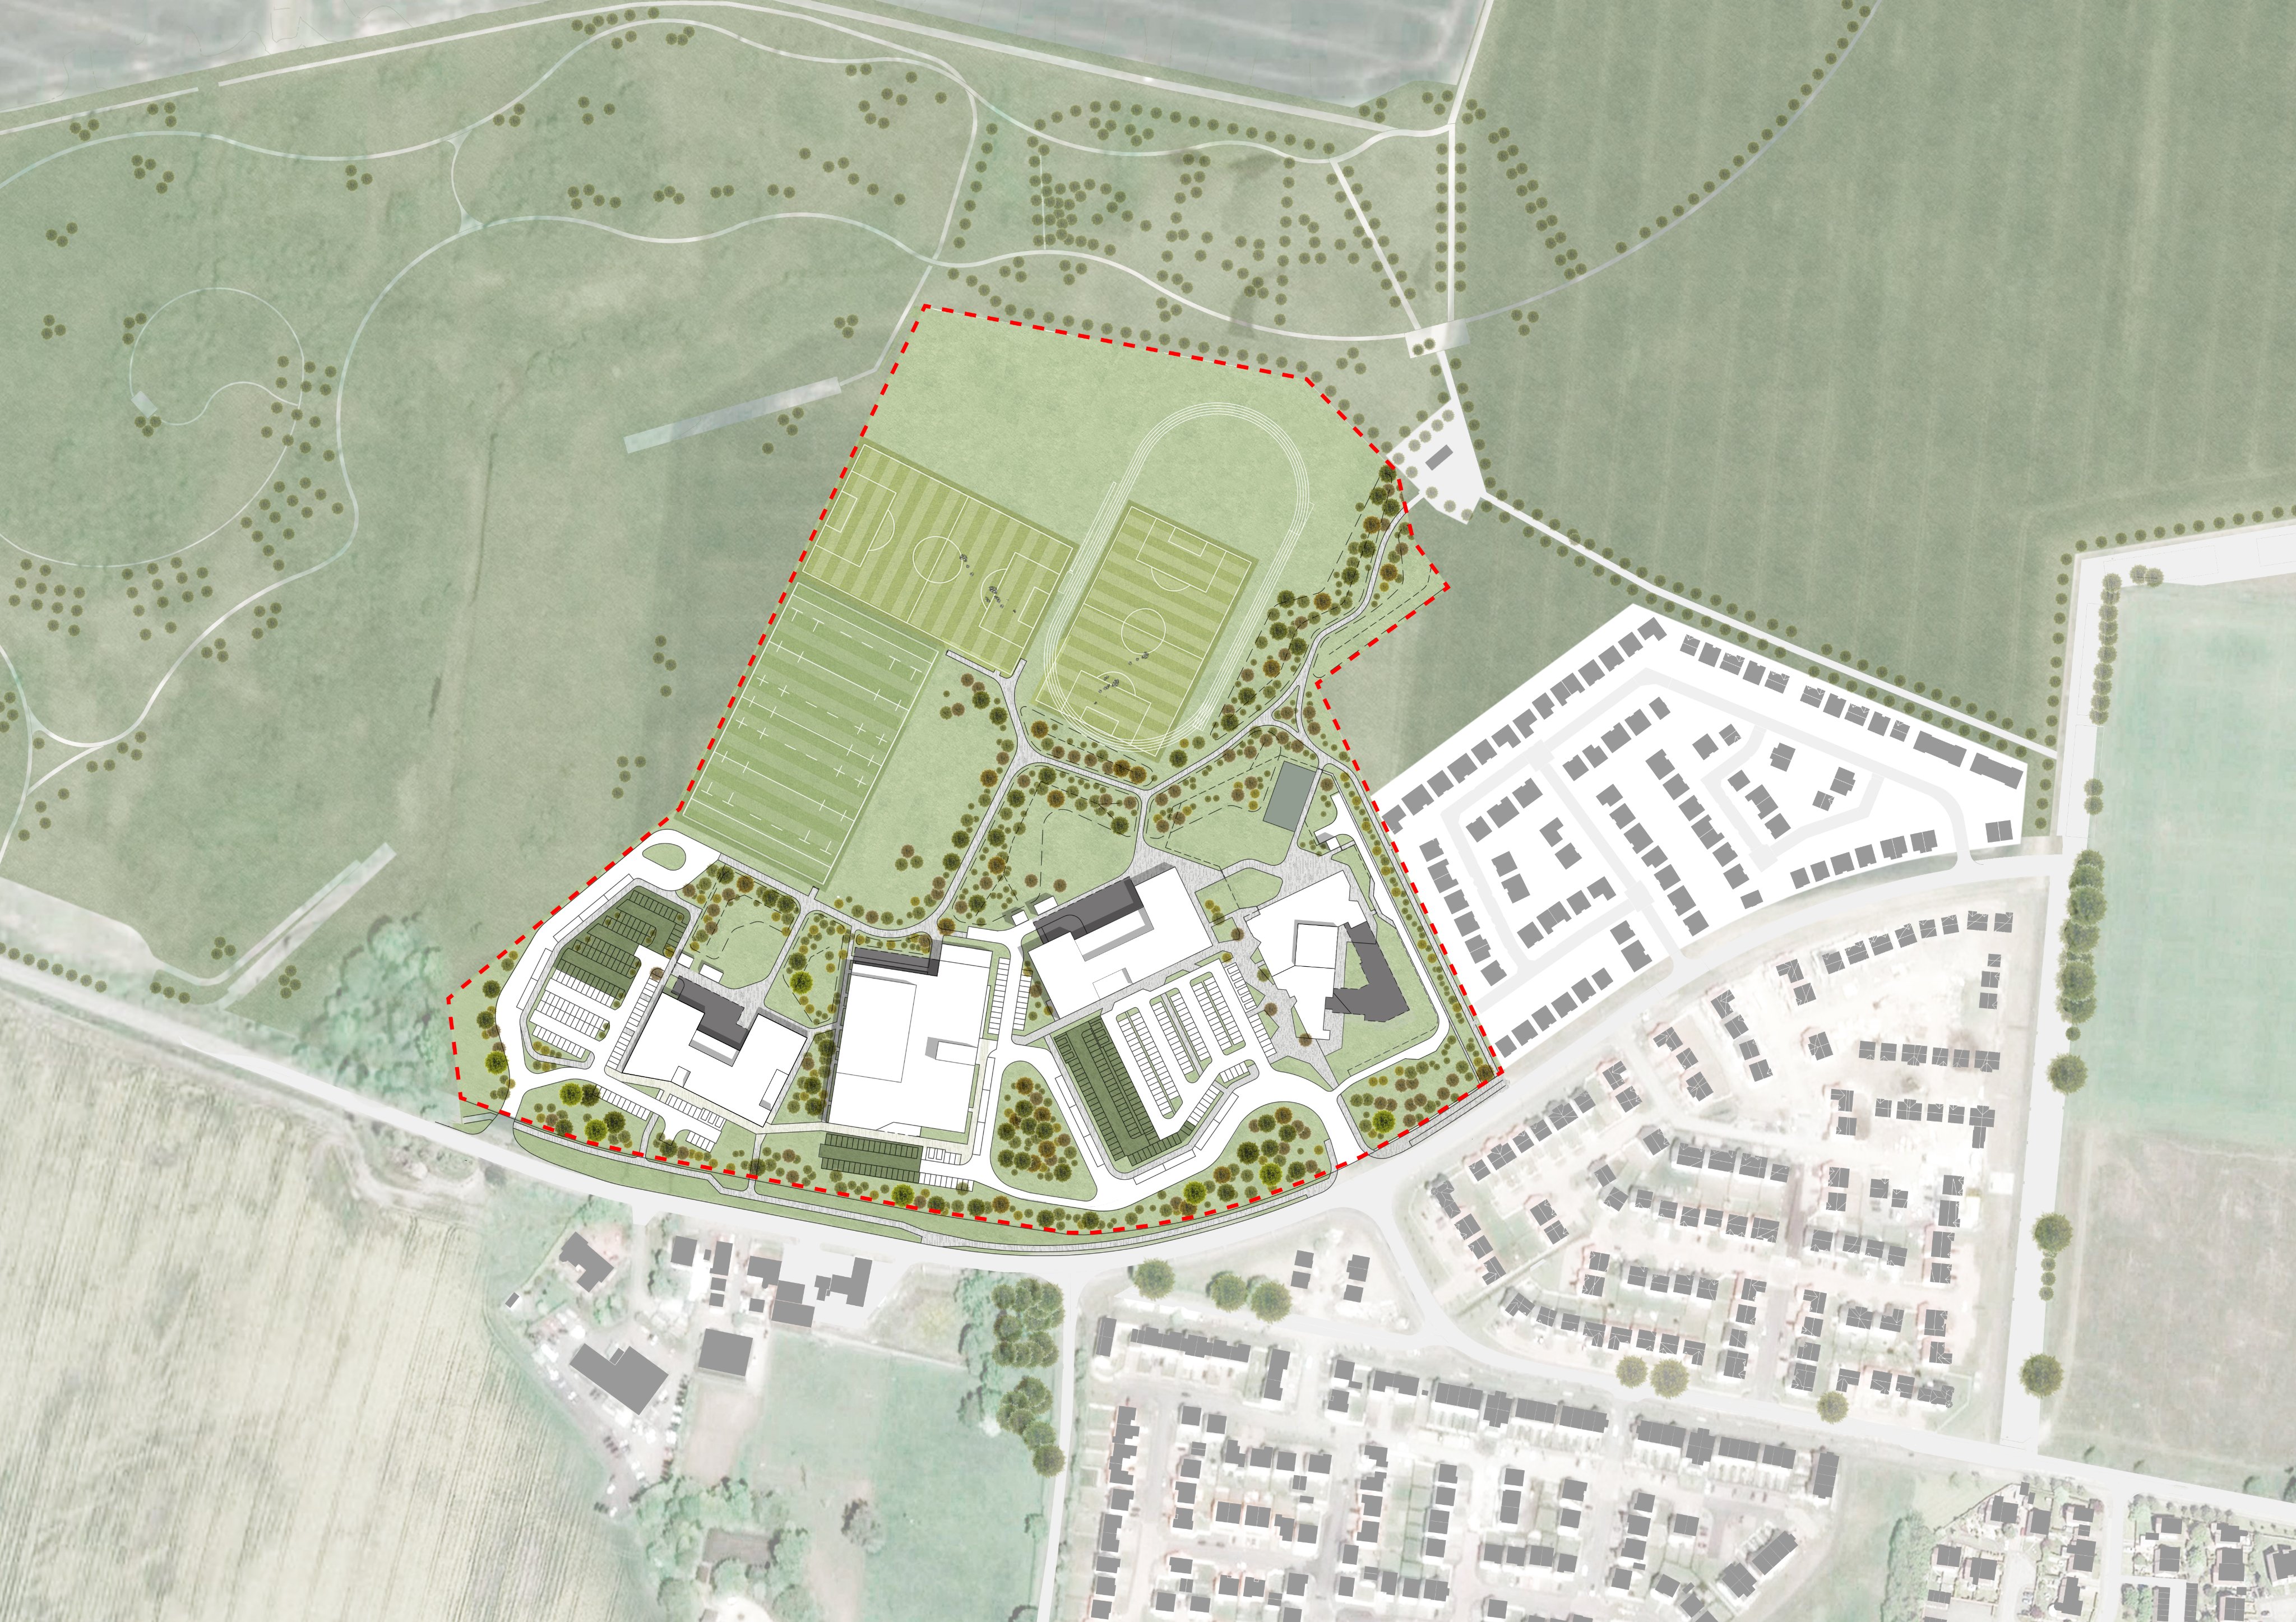 Three new schools gain planning permission in Winchburgh